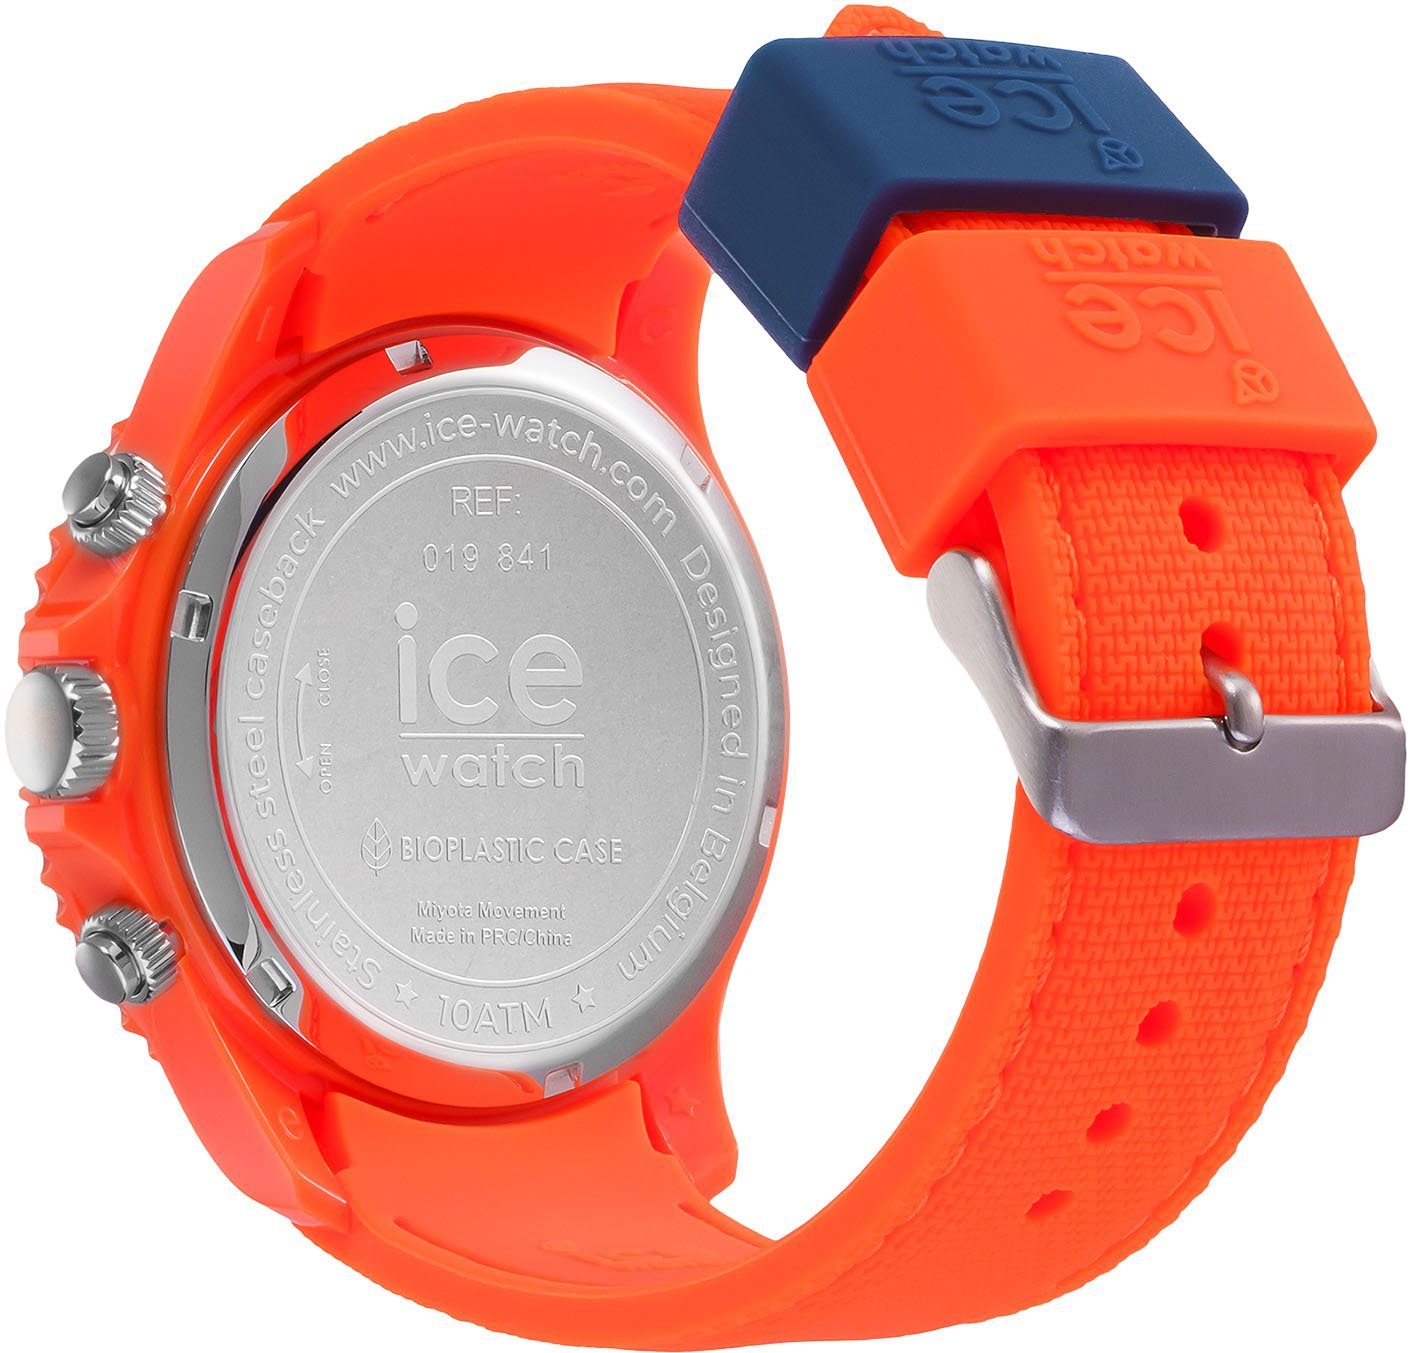 ice-watch Chronograph ICE chrono blue - 019841 Orange CH, - - Large